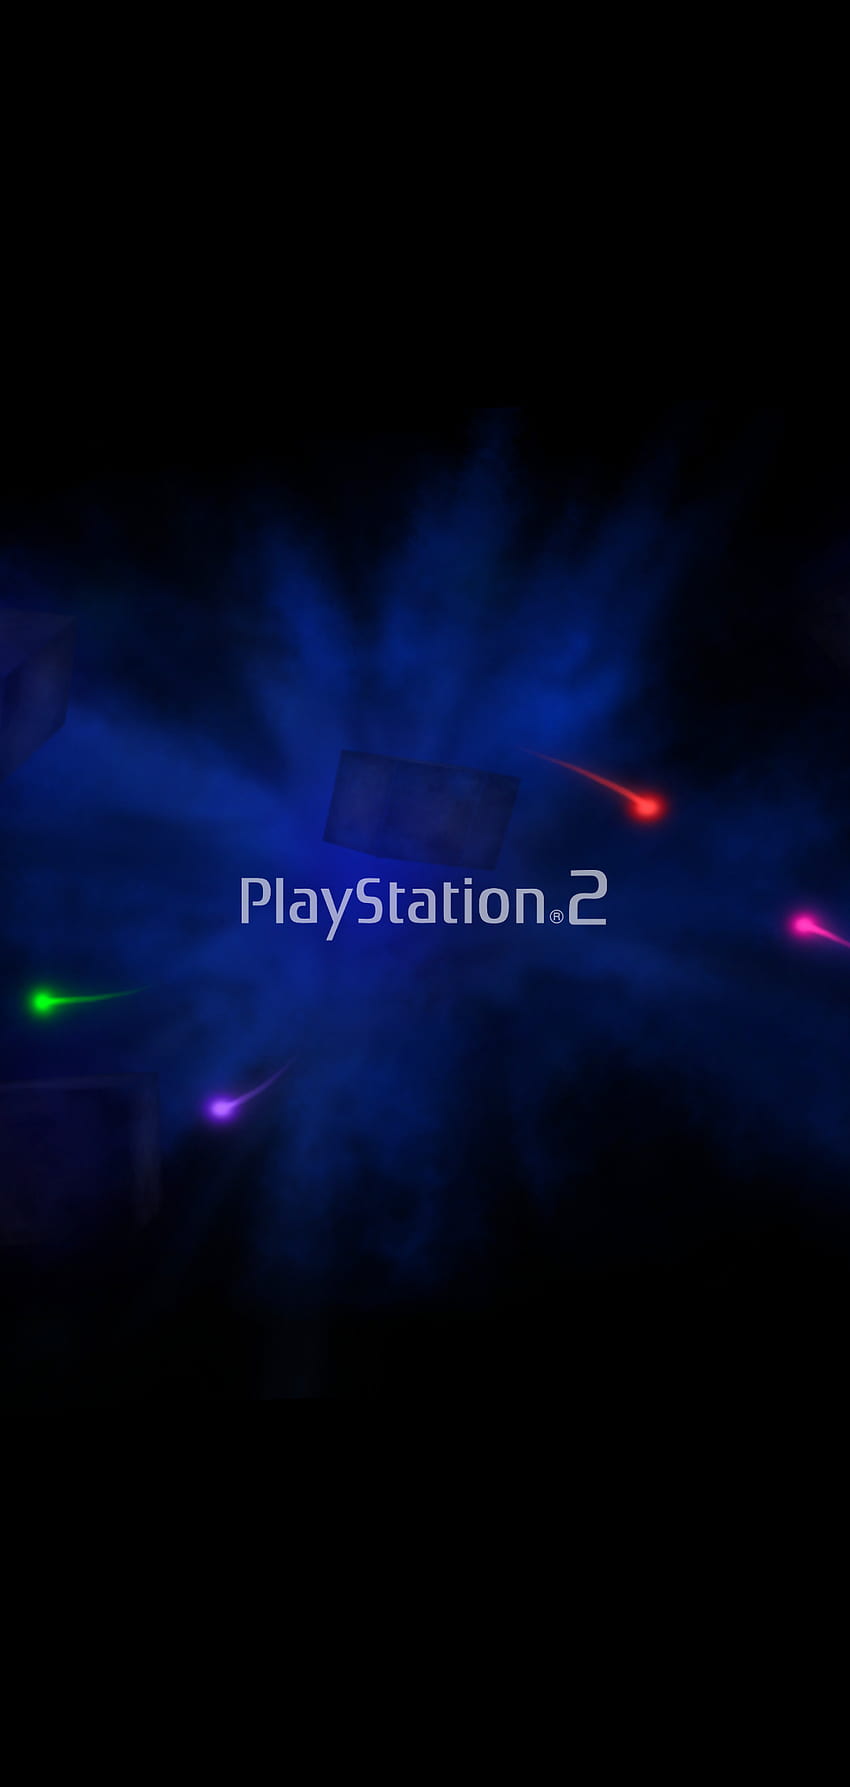 Playstation 2, amoled, videogame, logo, PS2 Papel de parede de celular HD